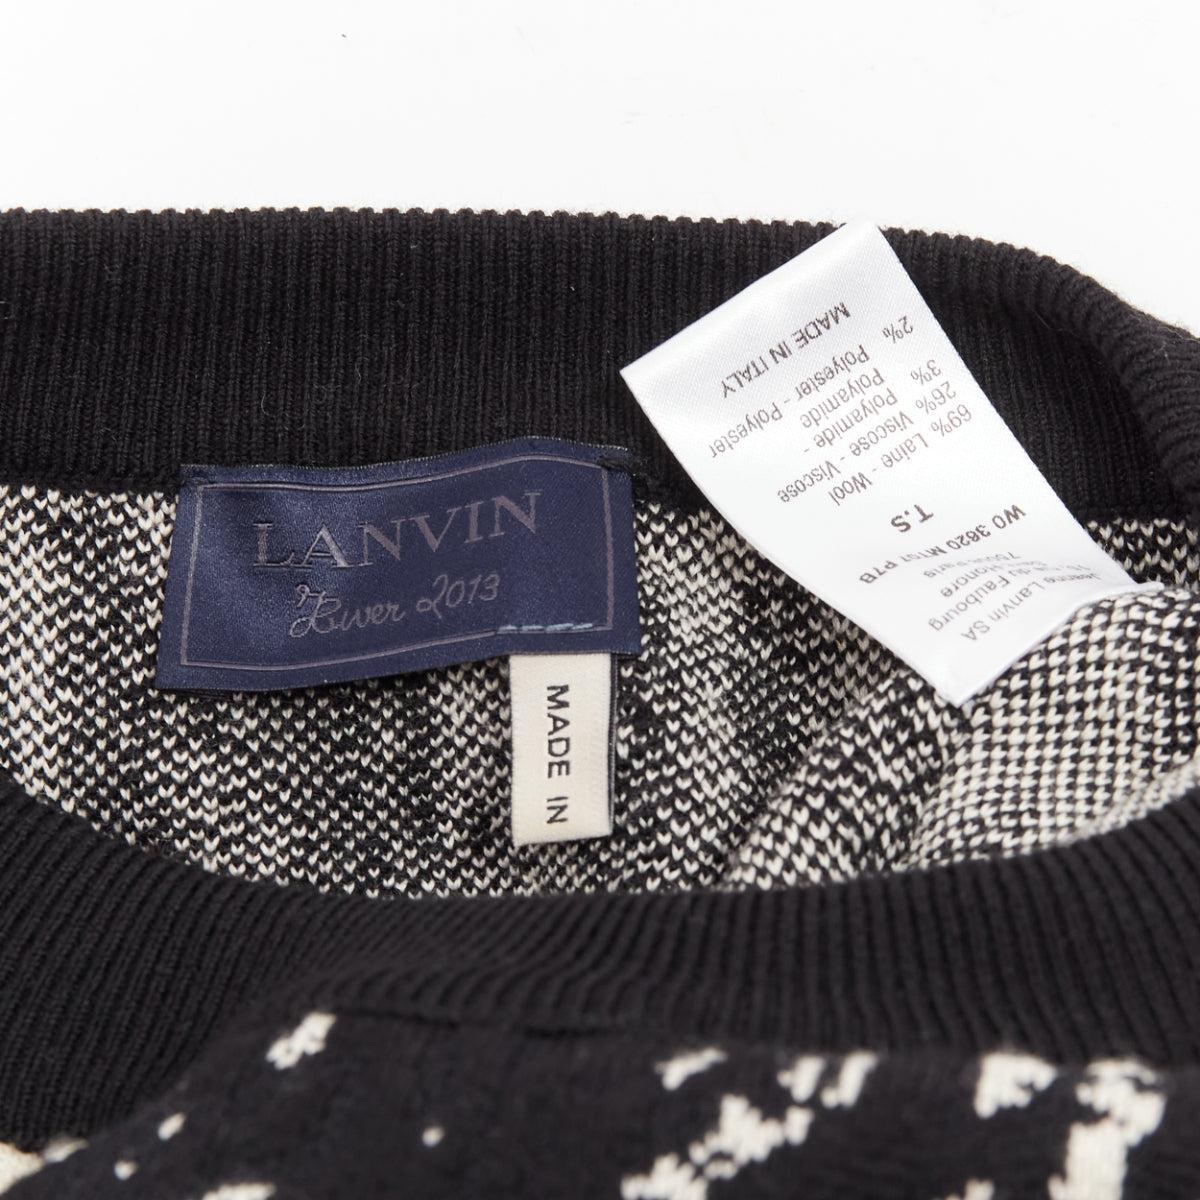 LANVIN 2013 cream black leopard jacquard wool blend ringer sweater top S For Sale 4